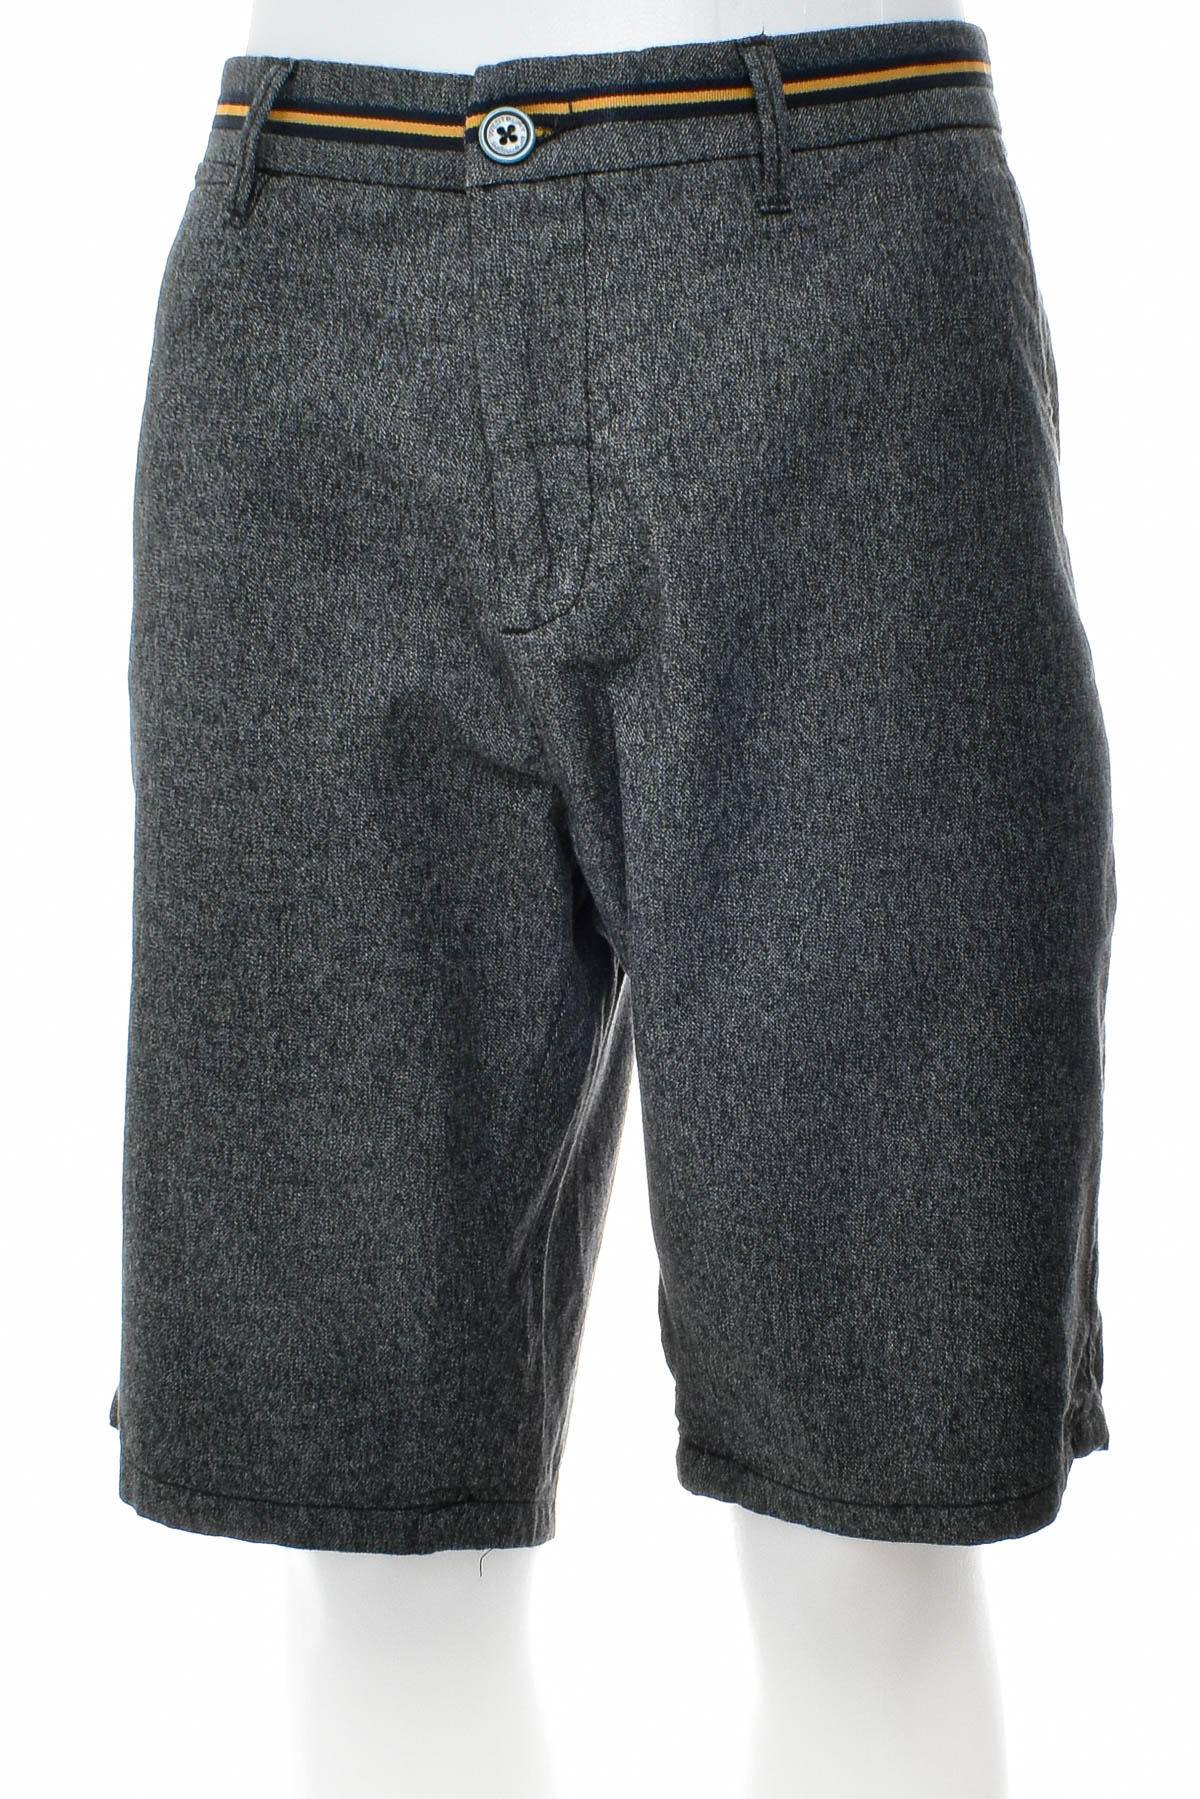 Men's shorts - WESTBURY - 0